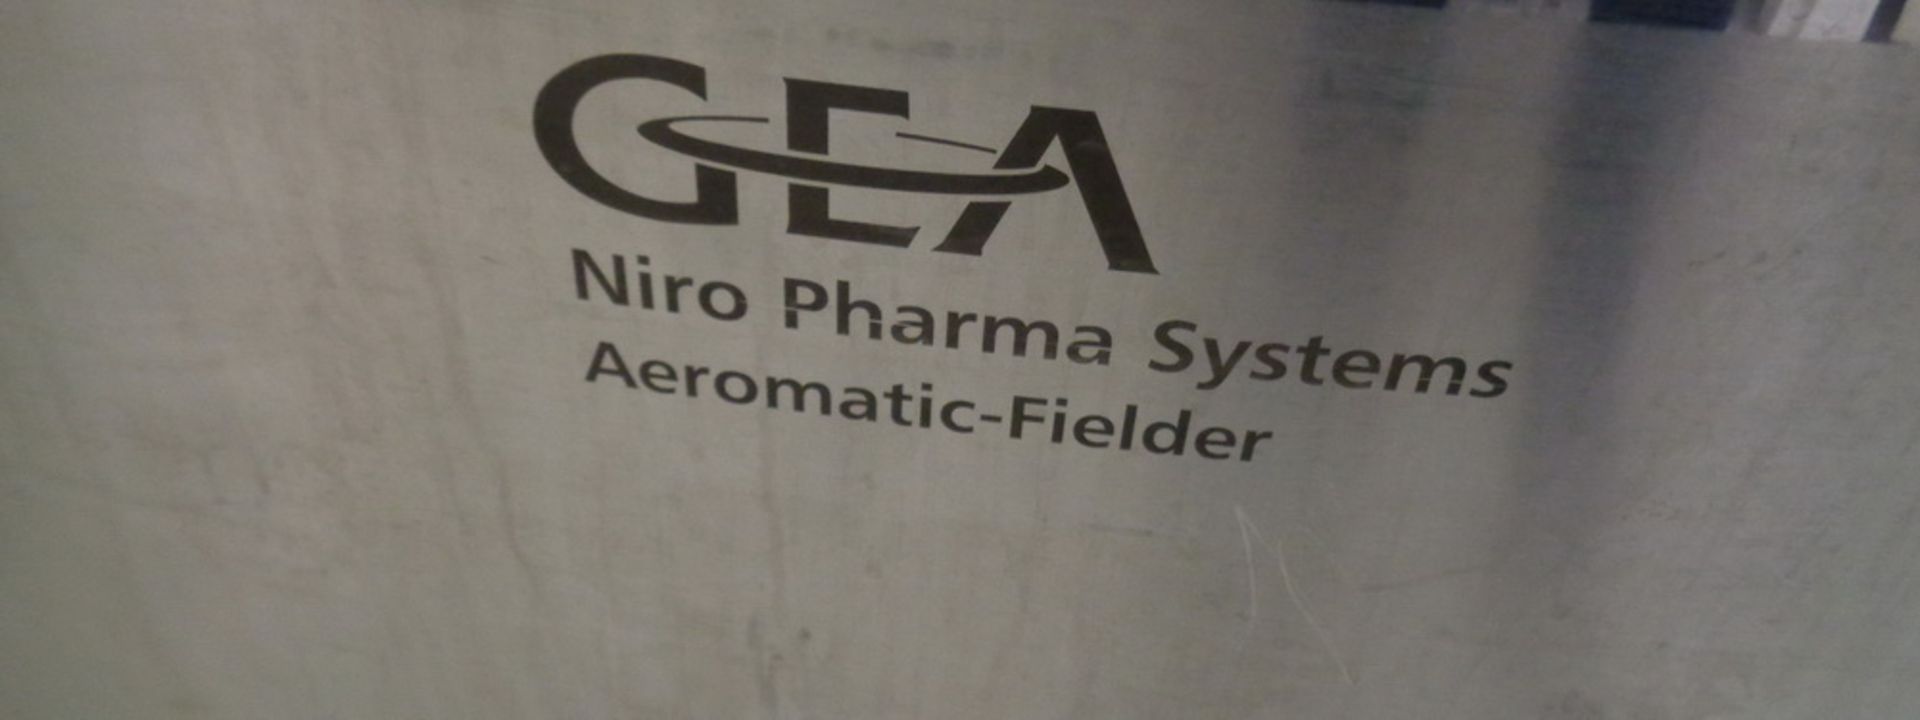 GEA Niro / Aeromatic-Fielder Spheronizer, Model S700, S/N 043721331 - Image 7 of 10